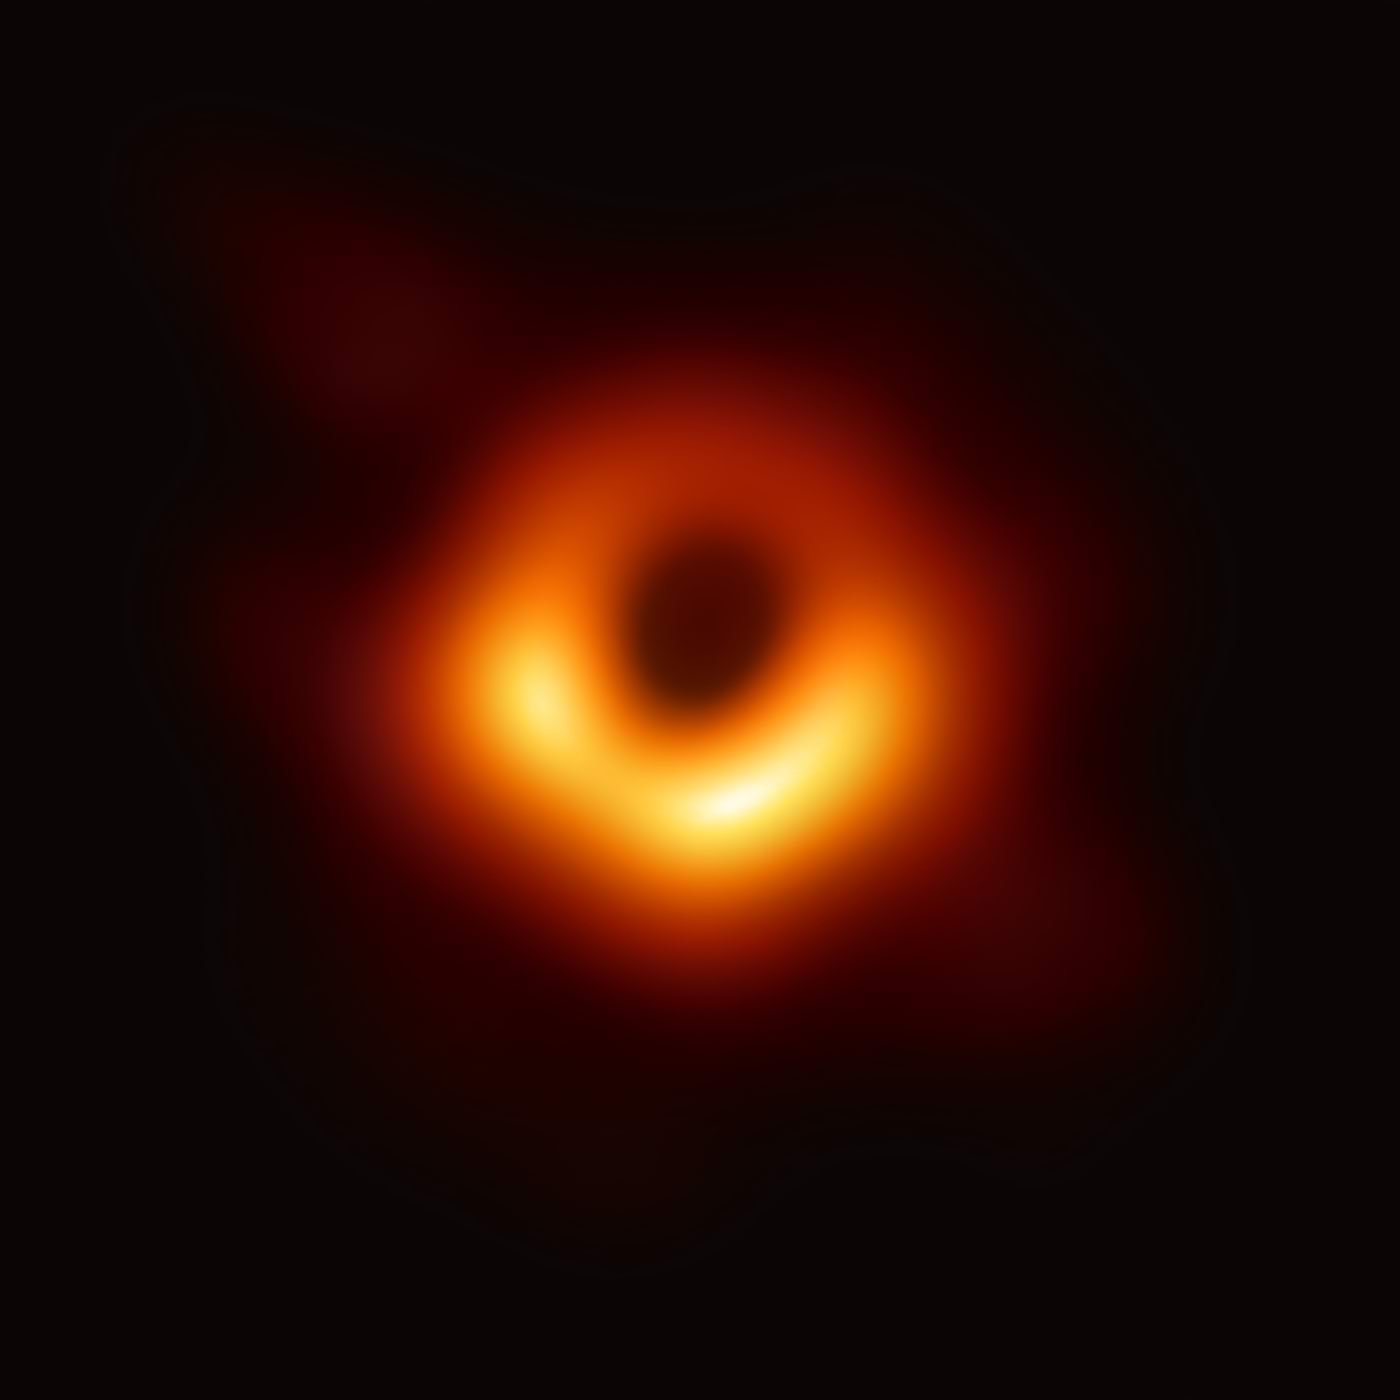 Ülimassiivne must auk galaktika Messier 87 tsentris